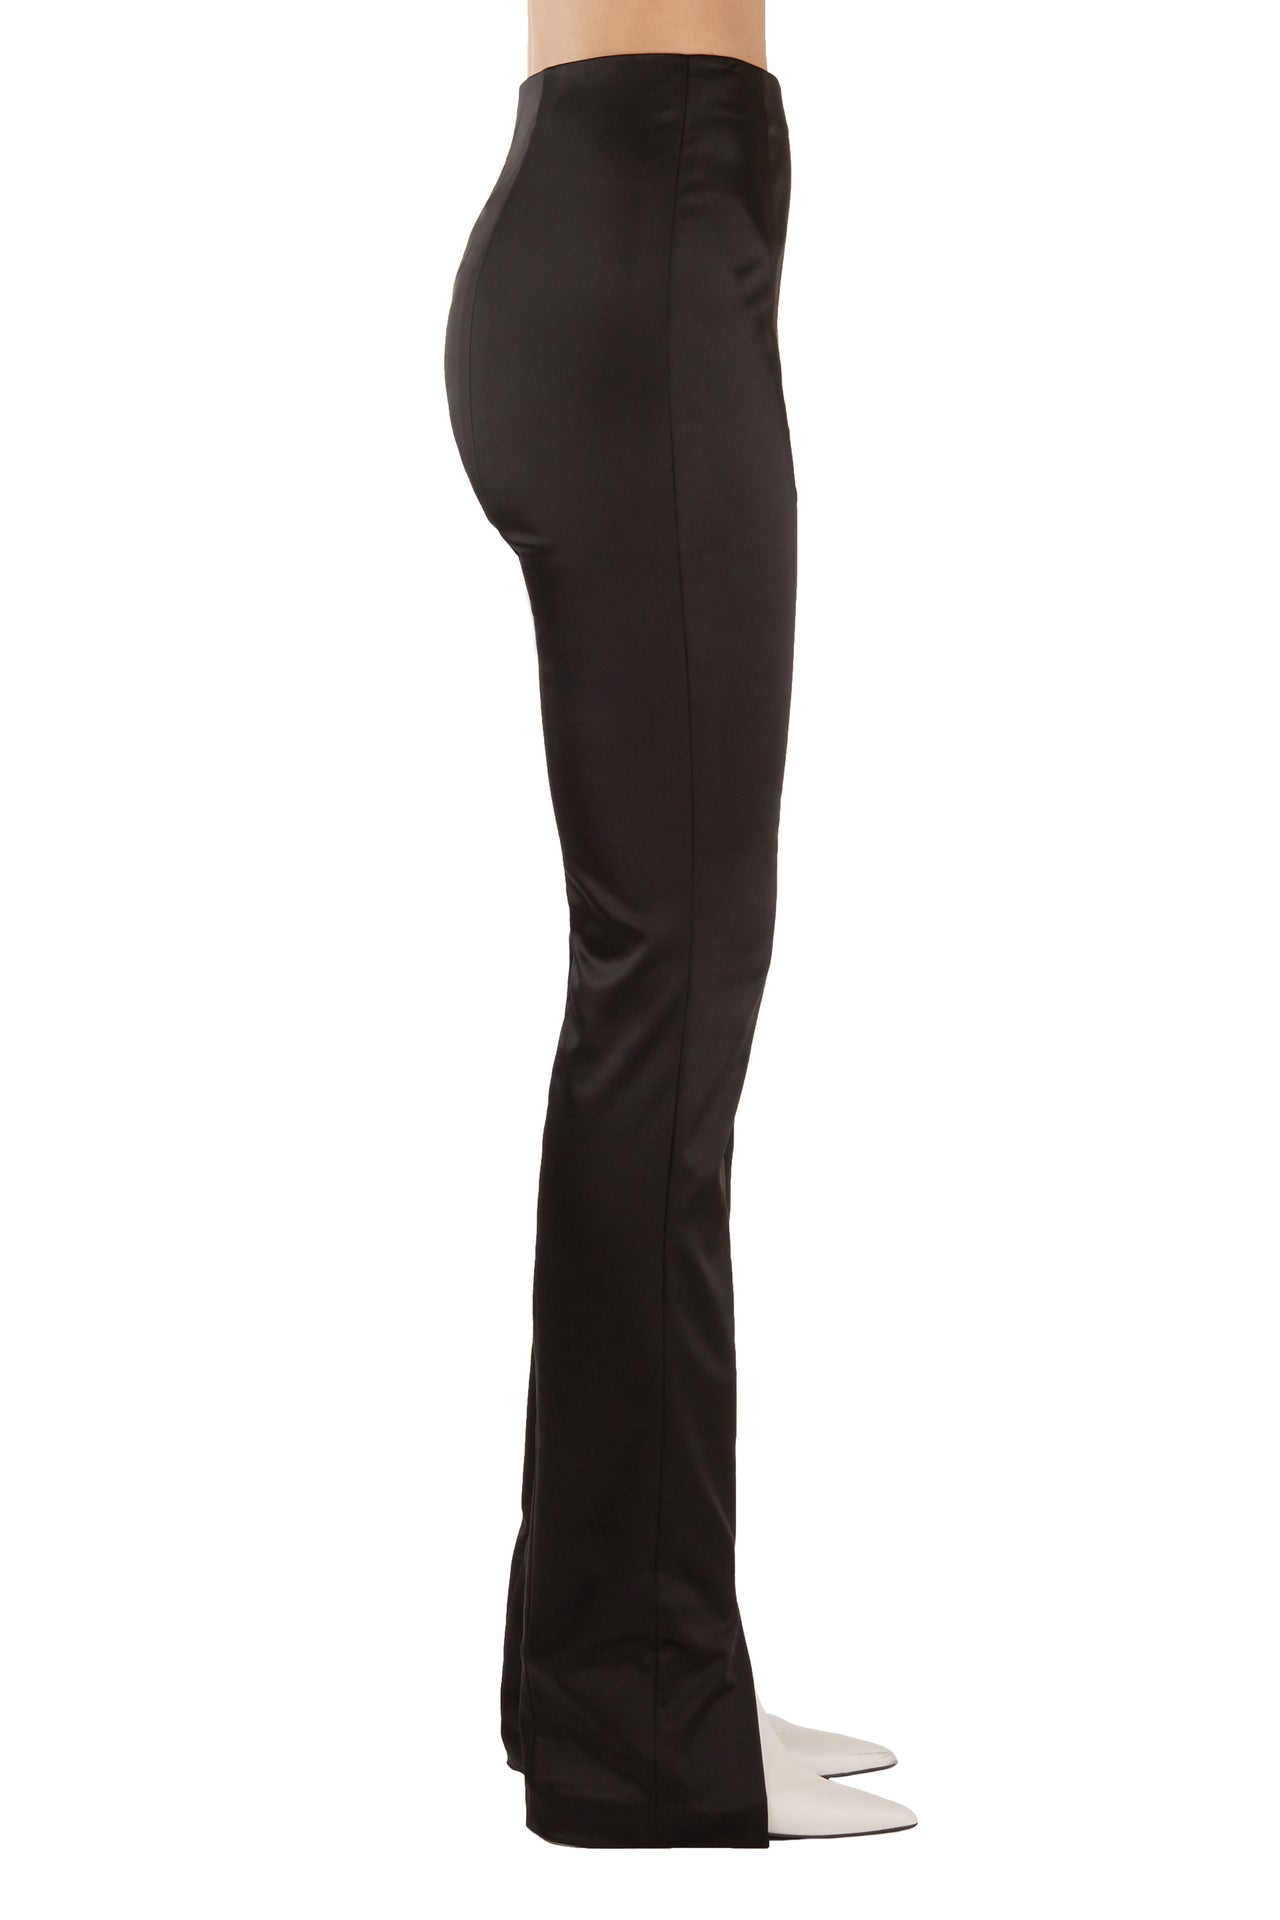 Victoria Women's Shiny Nylon High Waist Stretchy Tricot Skinny Short  Leggings, Black, LXL at  Women's Clothing store